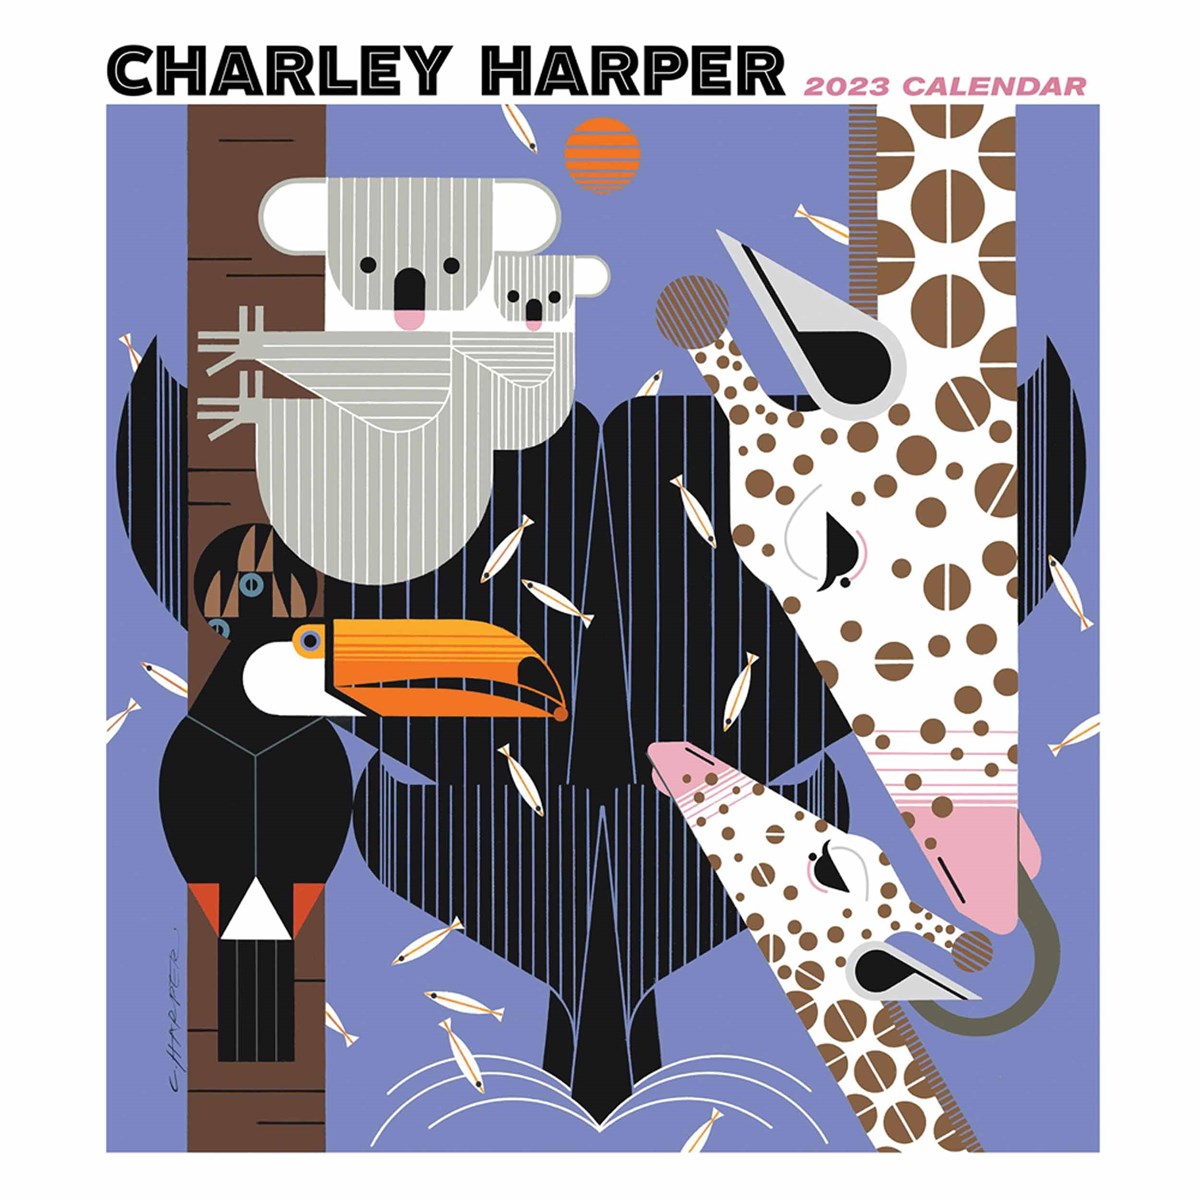 Charley Harper 2023 Calendars